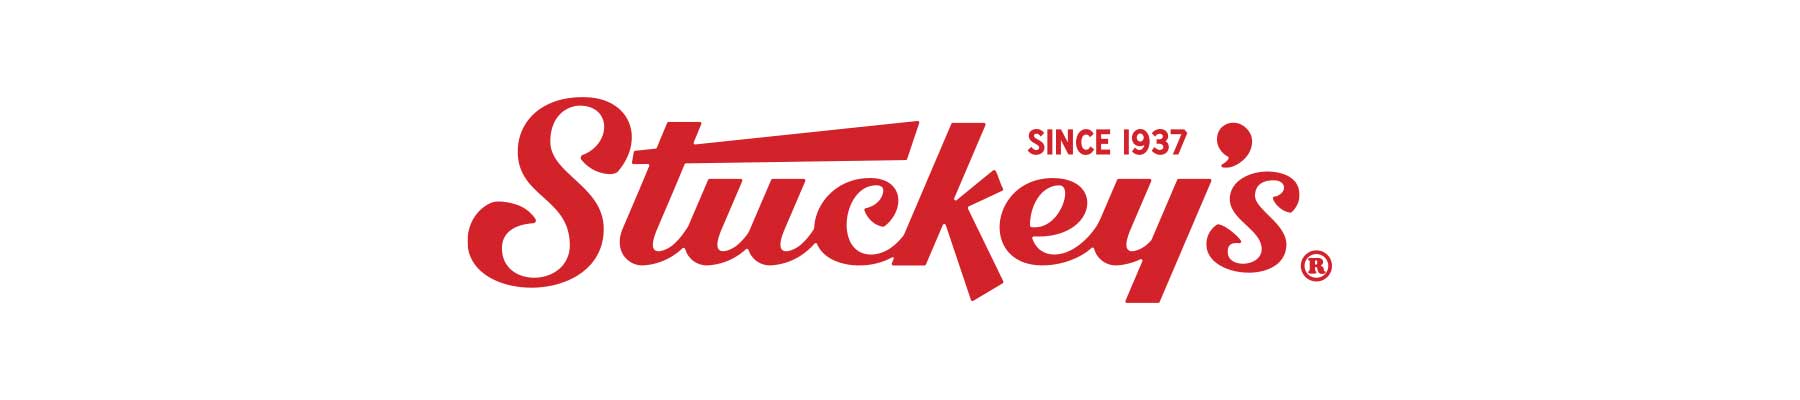 Stuckey's Corporation brand logo